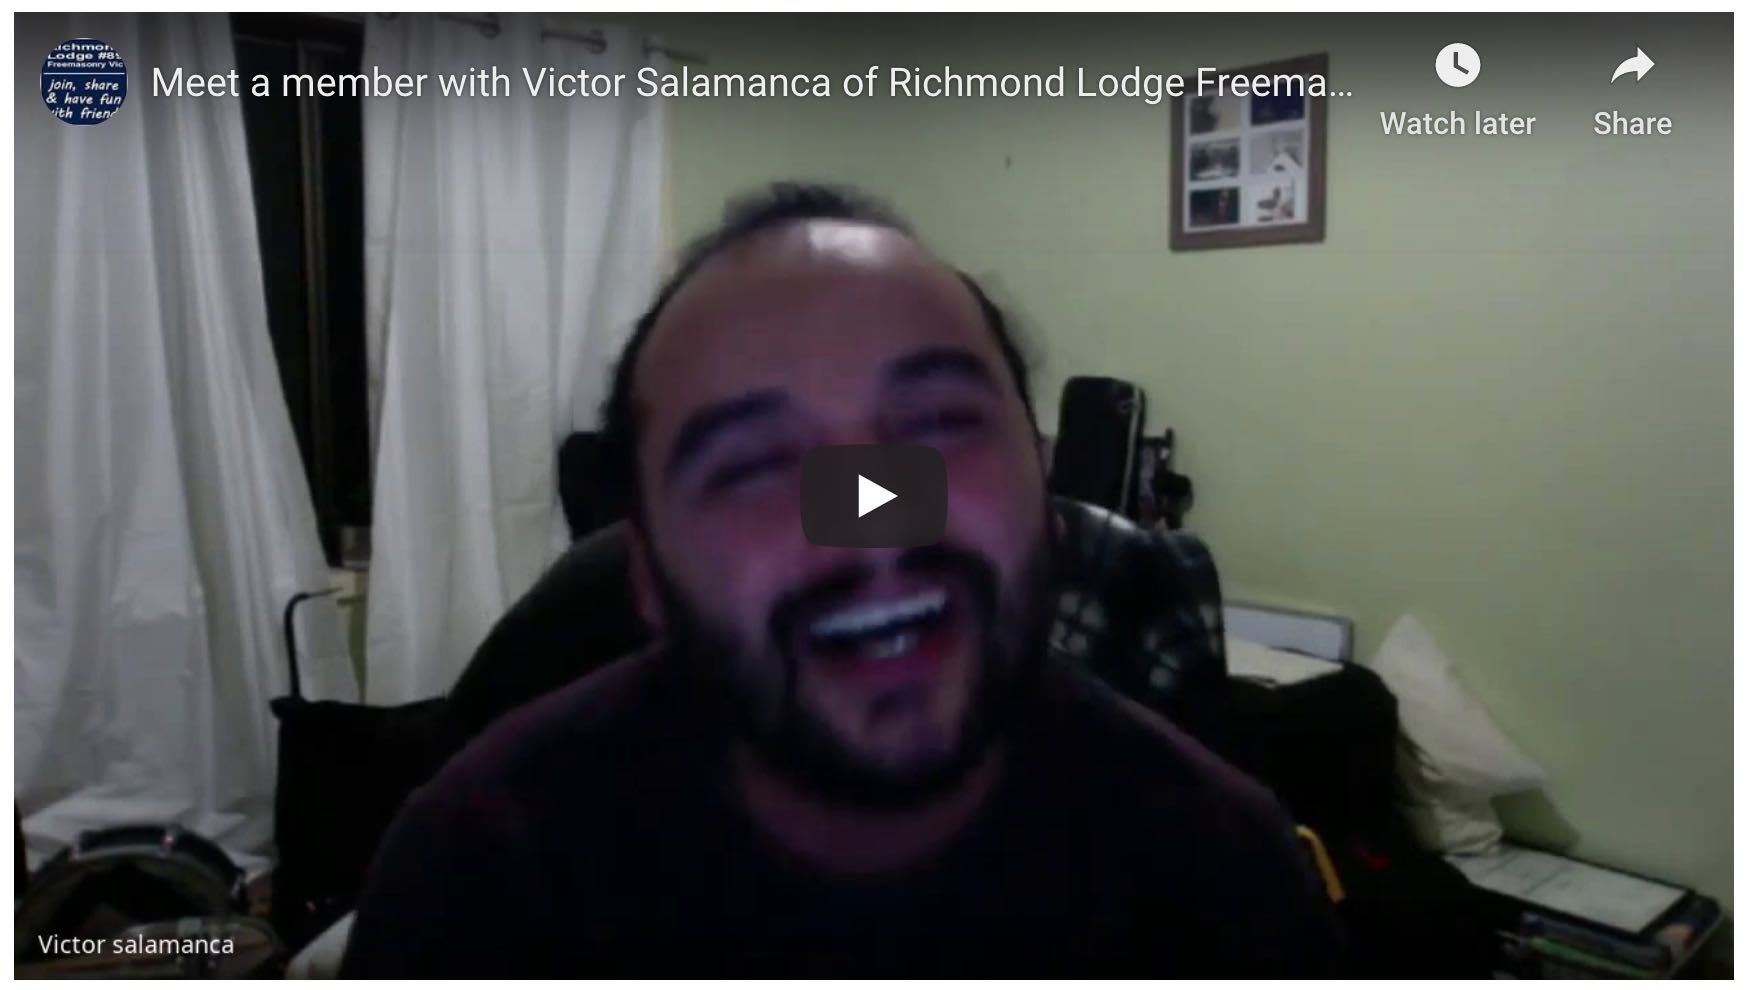 Meet a member with Victor Salamanca of Richmond Lodge Freemasonry Victoria